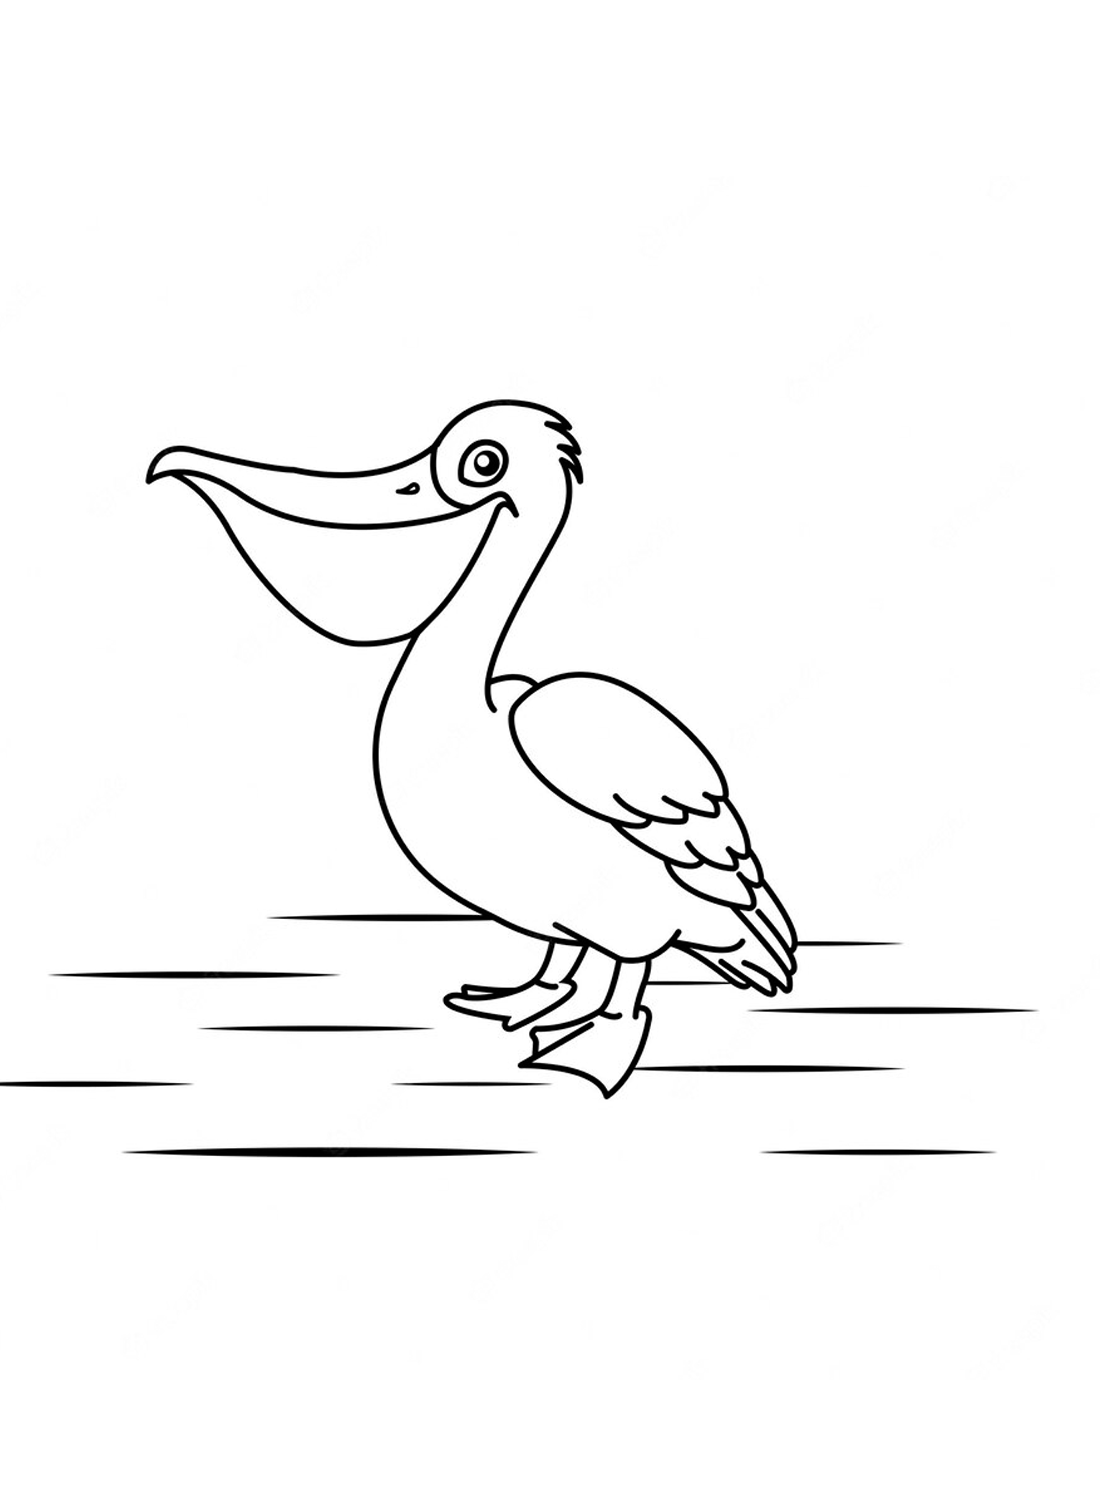 Very Simple Pelican from Pelican